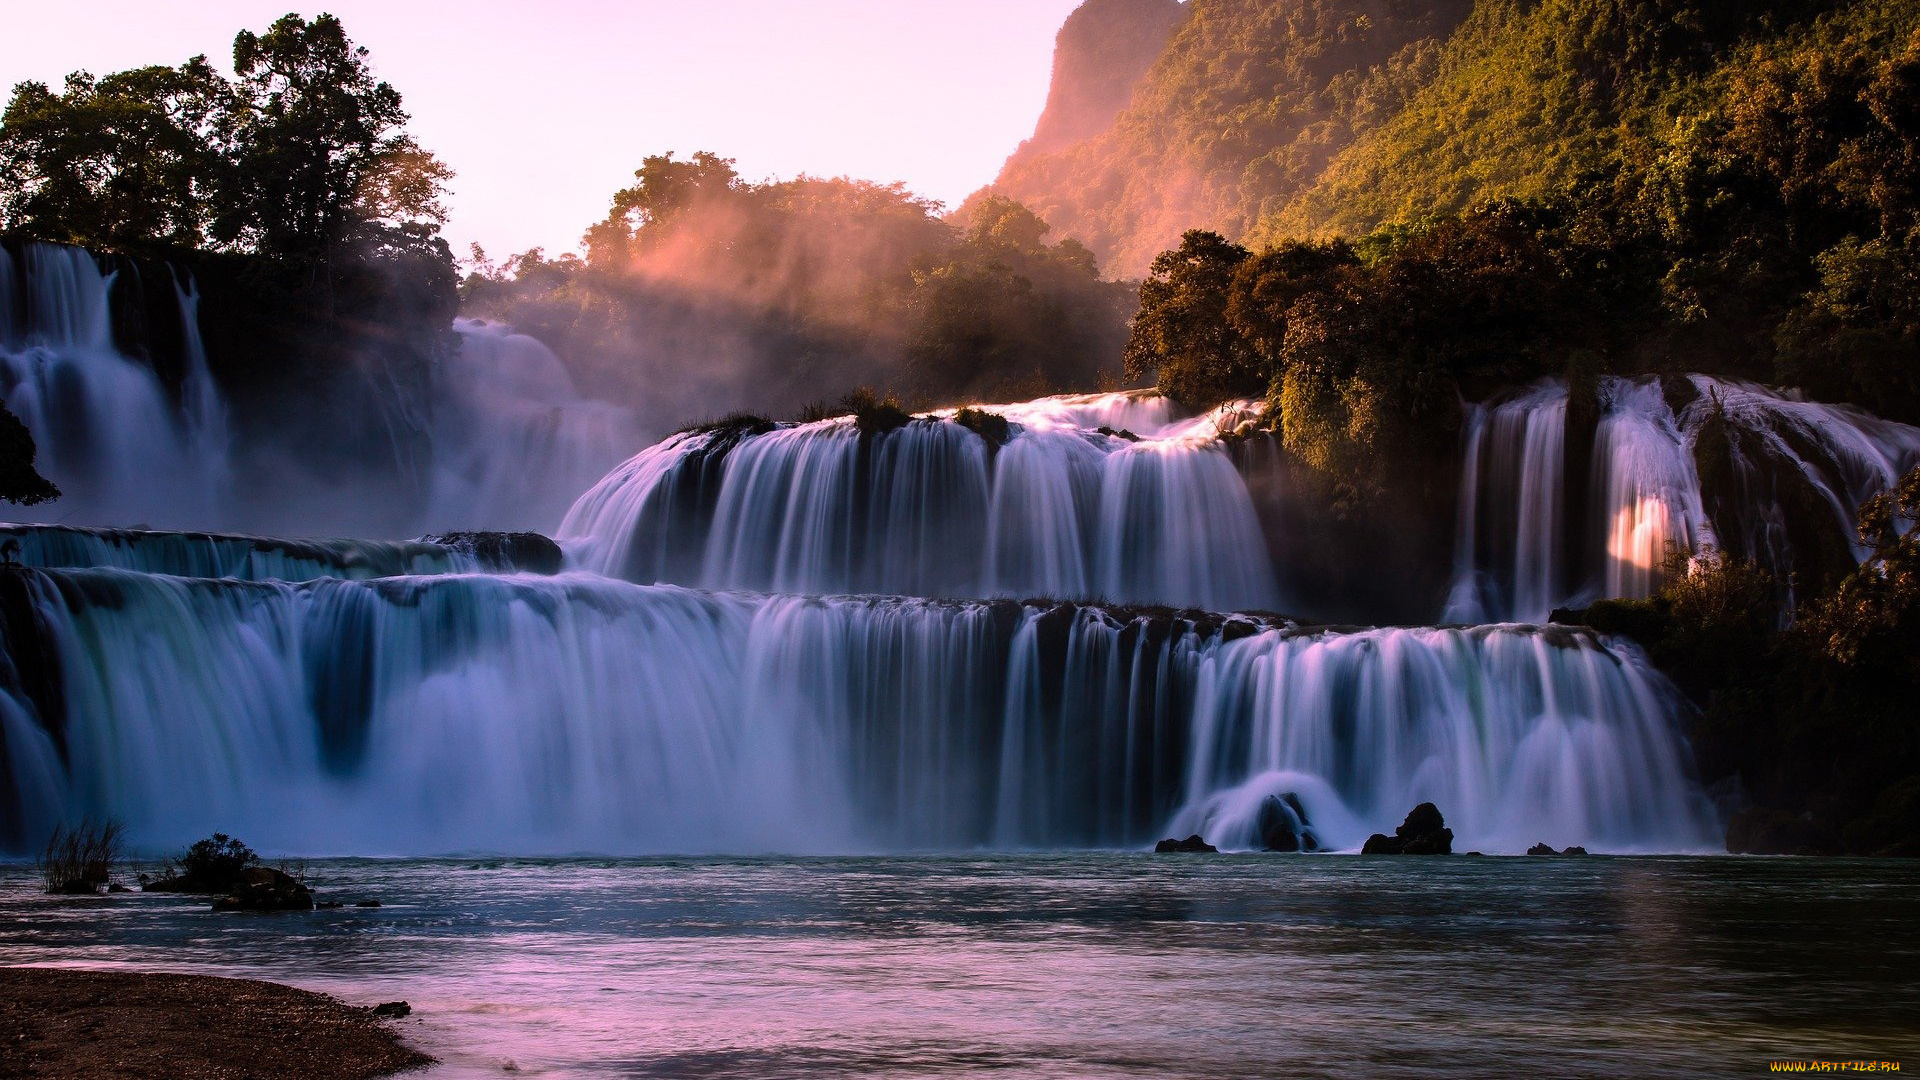 ban, gioc, waterfall, vietnam, природа, водопады, ban, gioc, waterfall